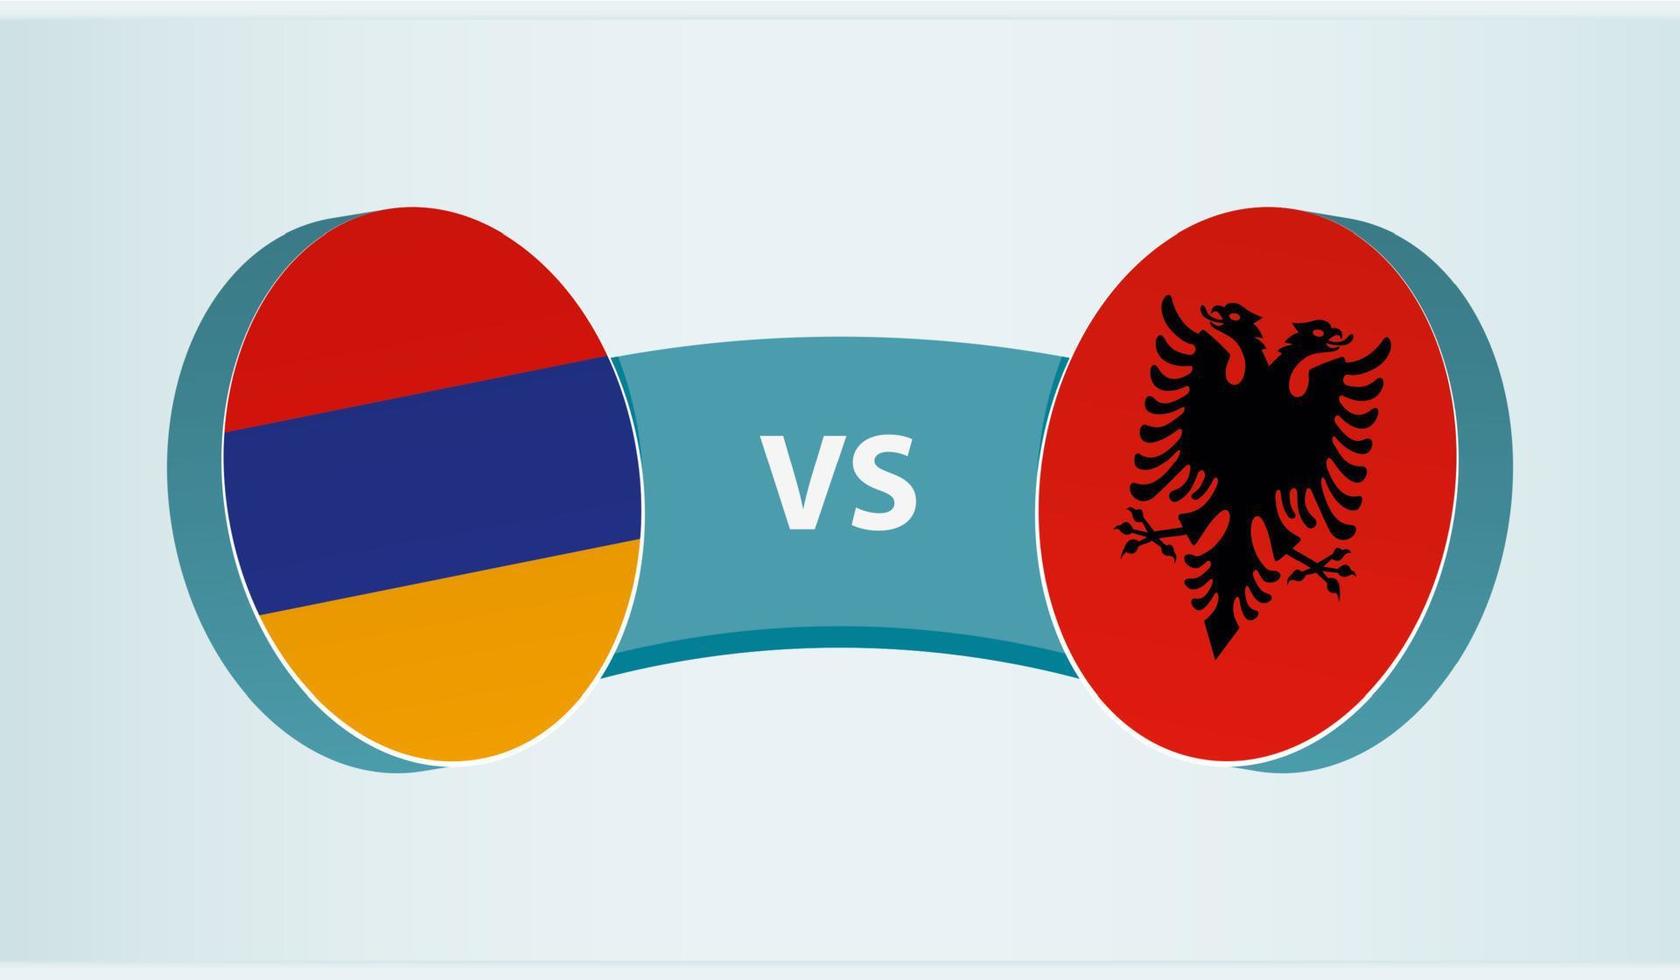 Armenia versus Albania, team sports competition concept. vector